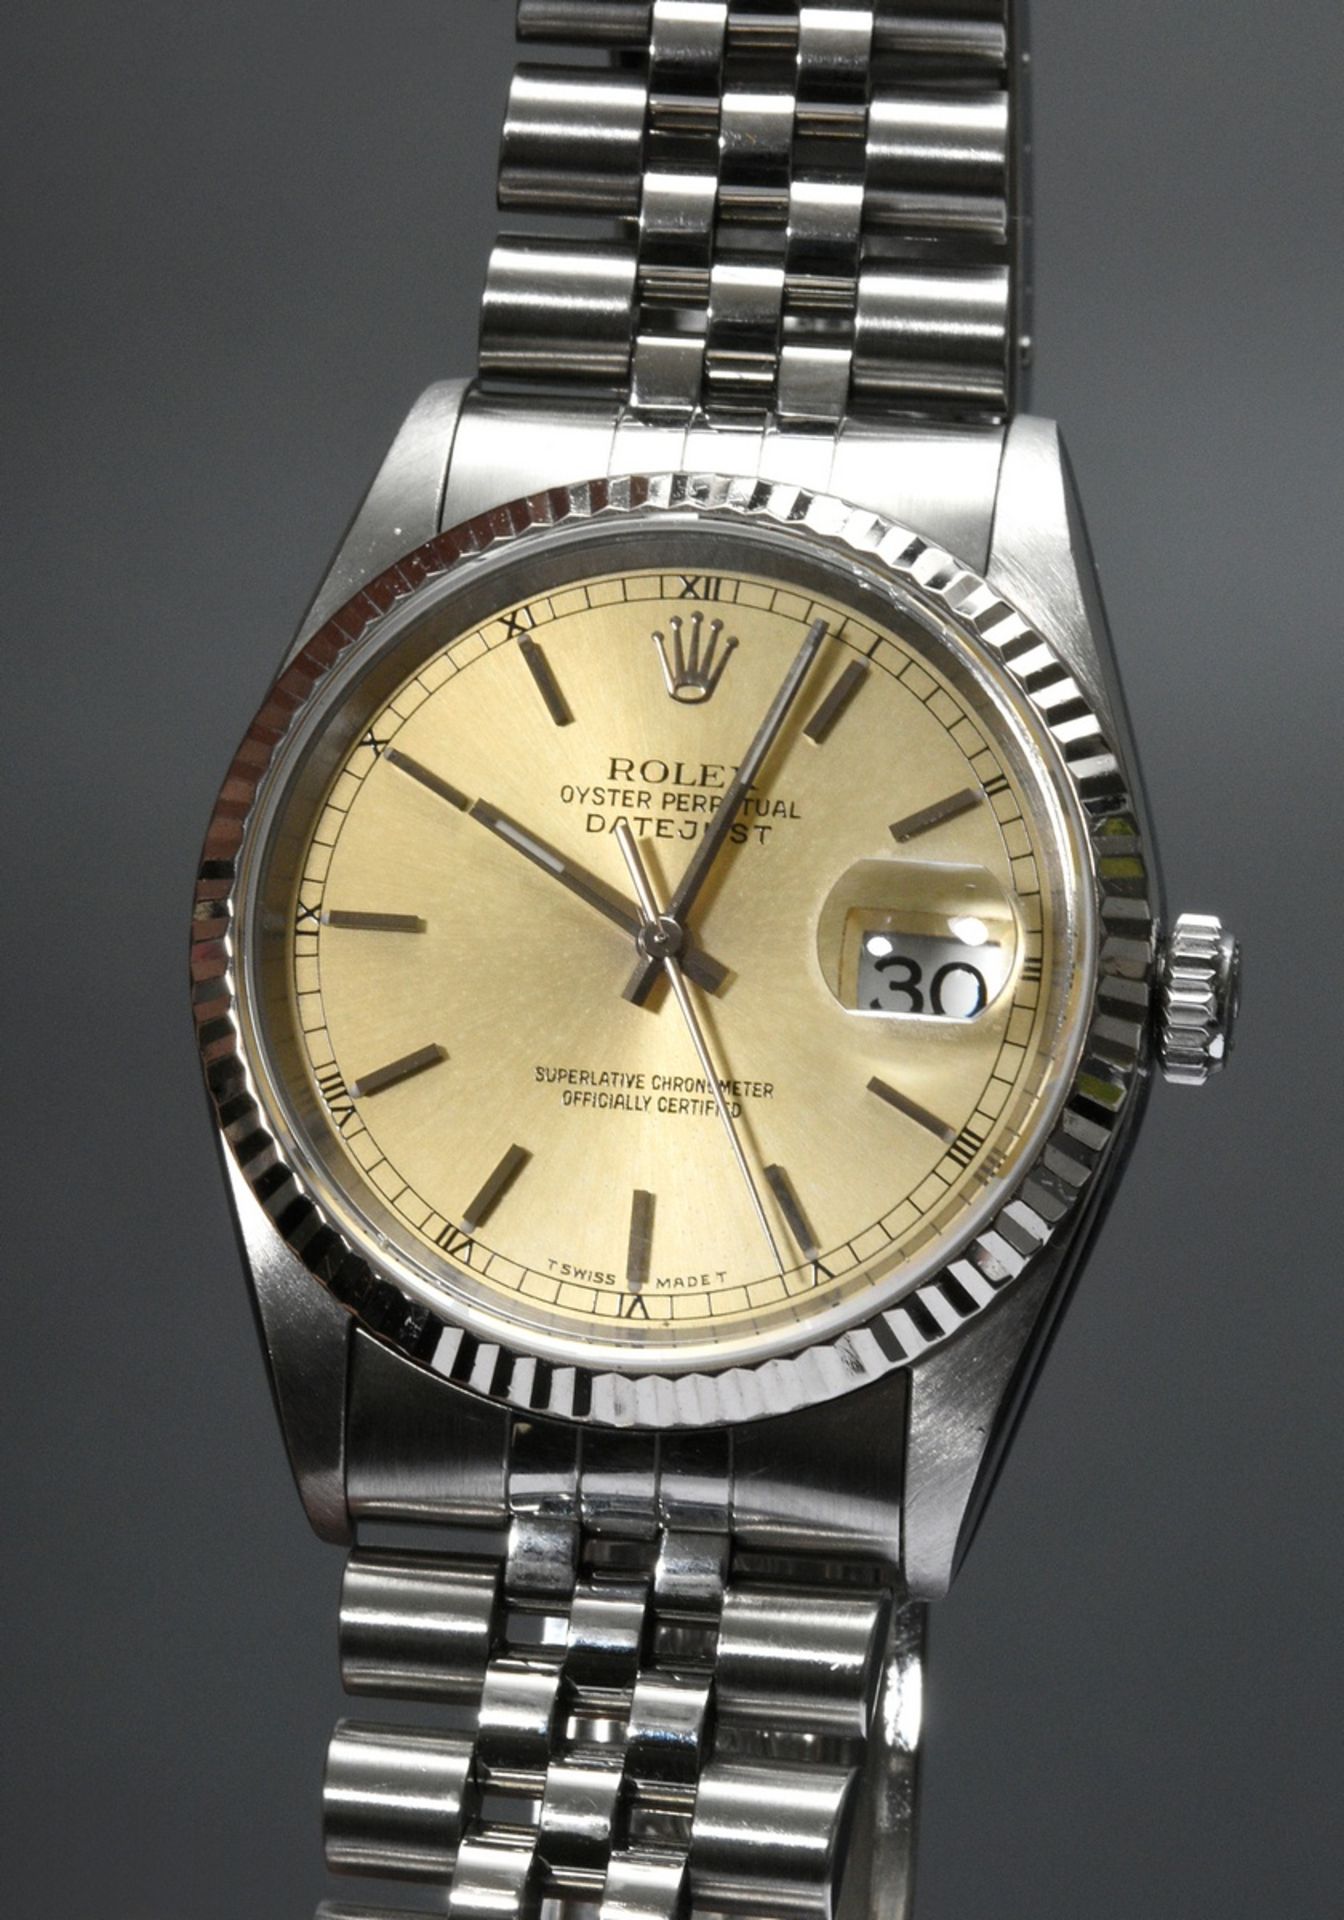 Rolex "Oyster Perpetual Datejust" Edelstahl Armbanduhr, Automatikwerk, vergoldetes Zifferblatt mit 